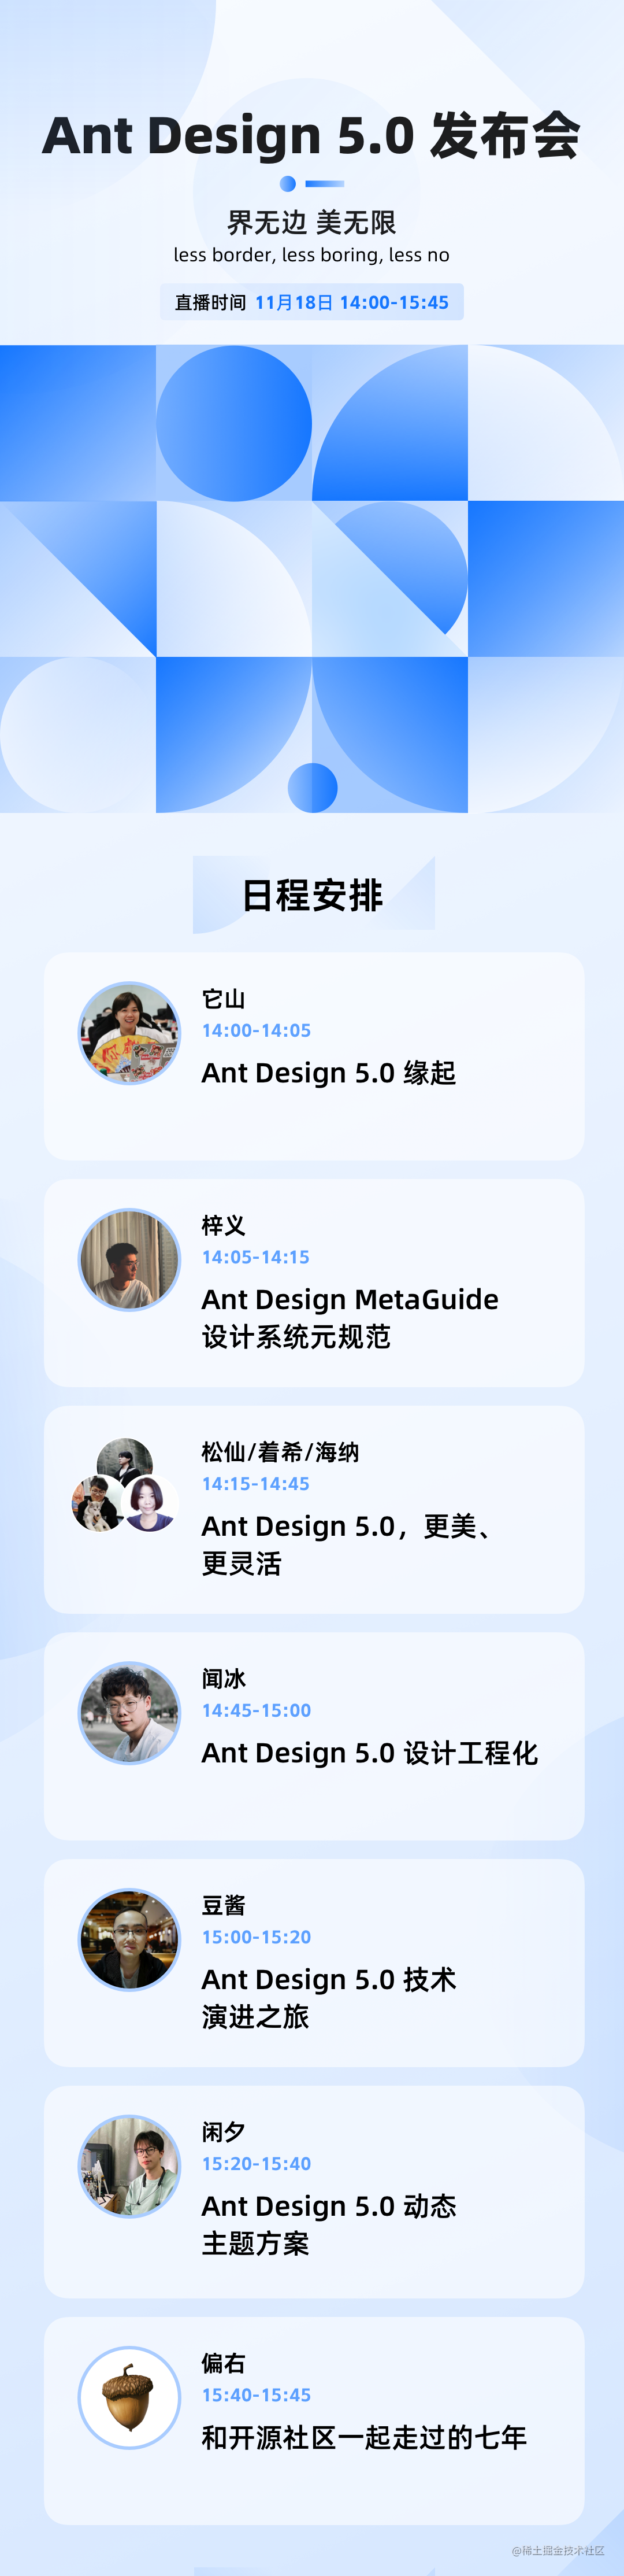 Ant Design 5.0 发布会议程来了！-烟雨网